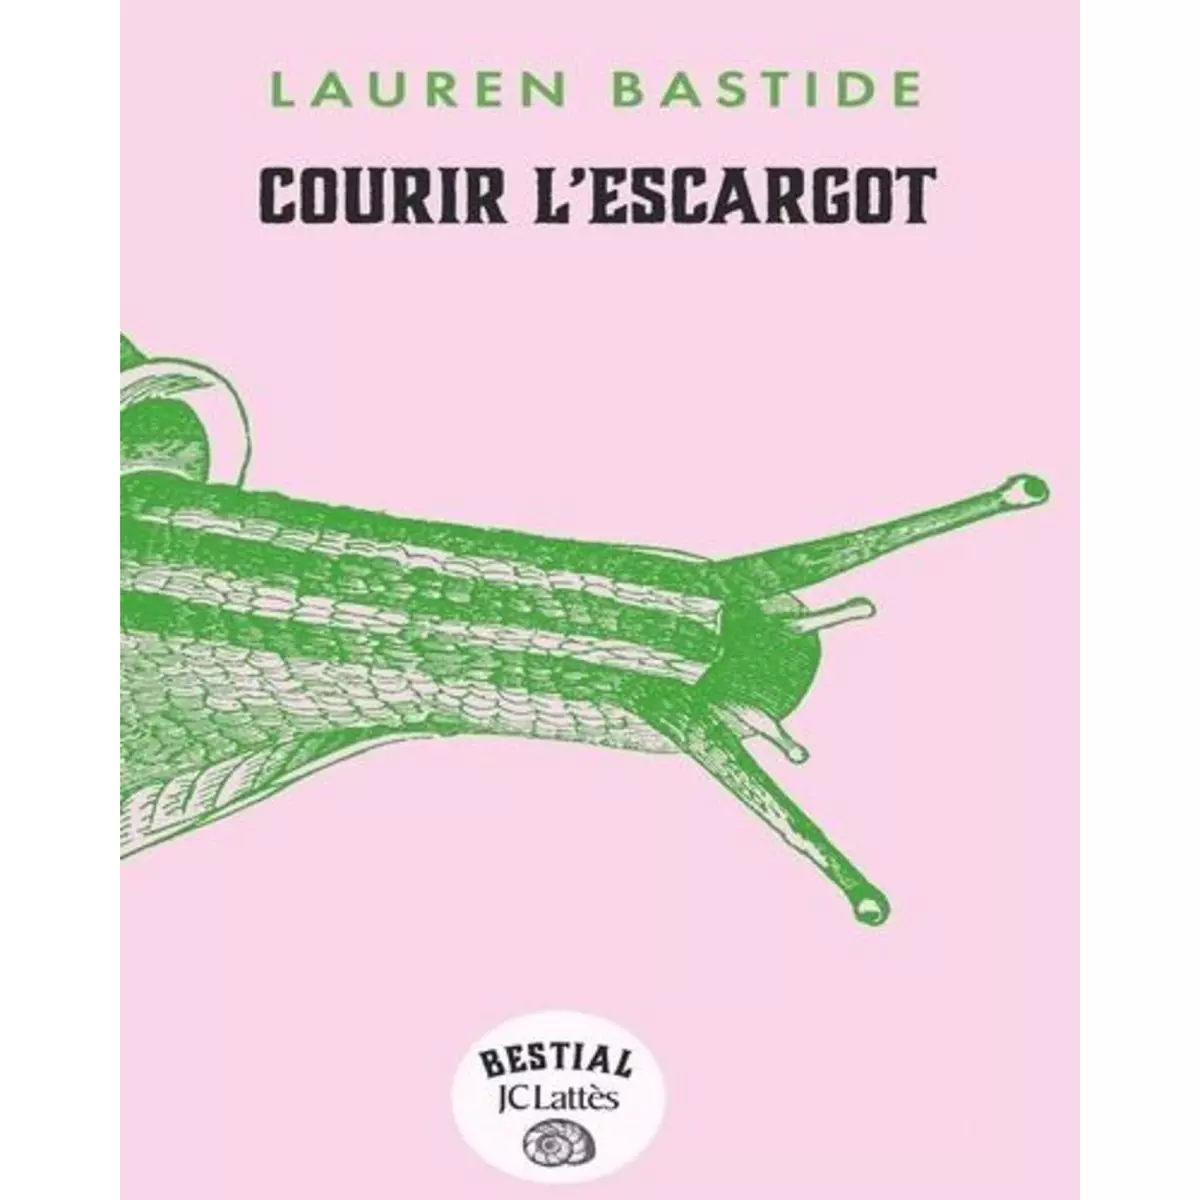  COURIR L'ESCARGOT, Bastide Lauren